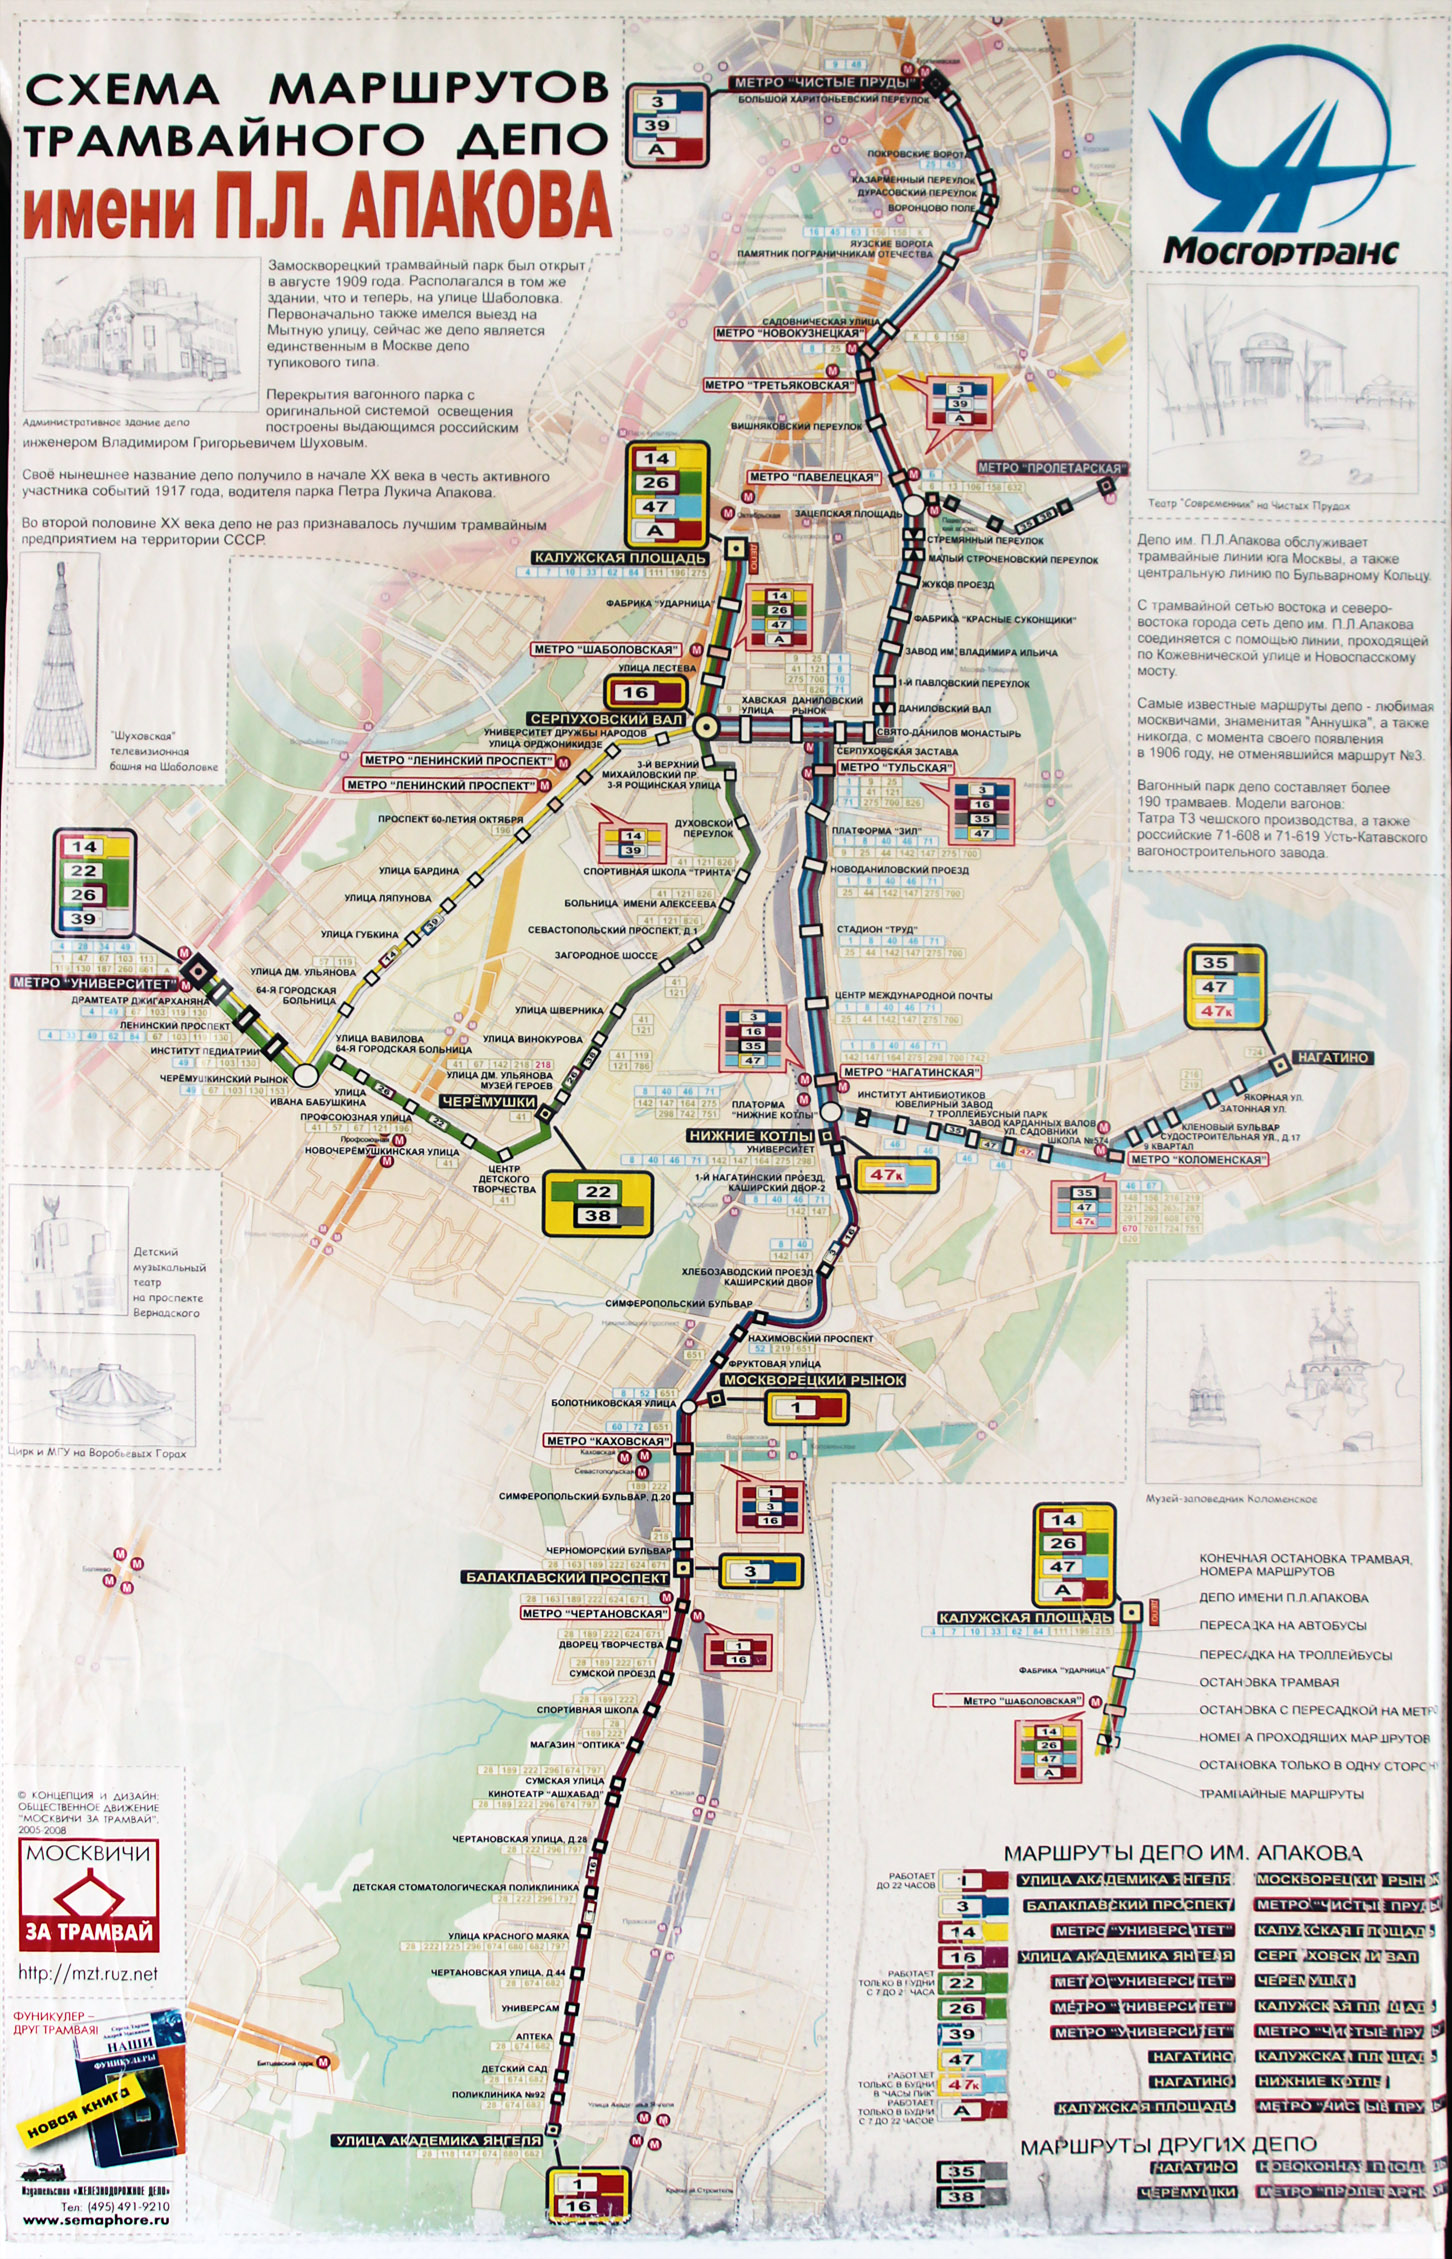 Moskau — Maps inside vehicles (tram)